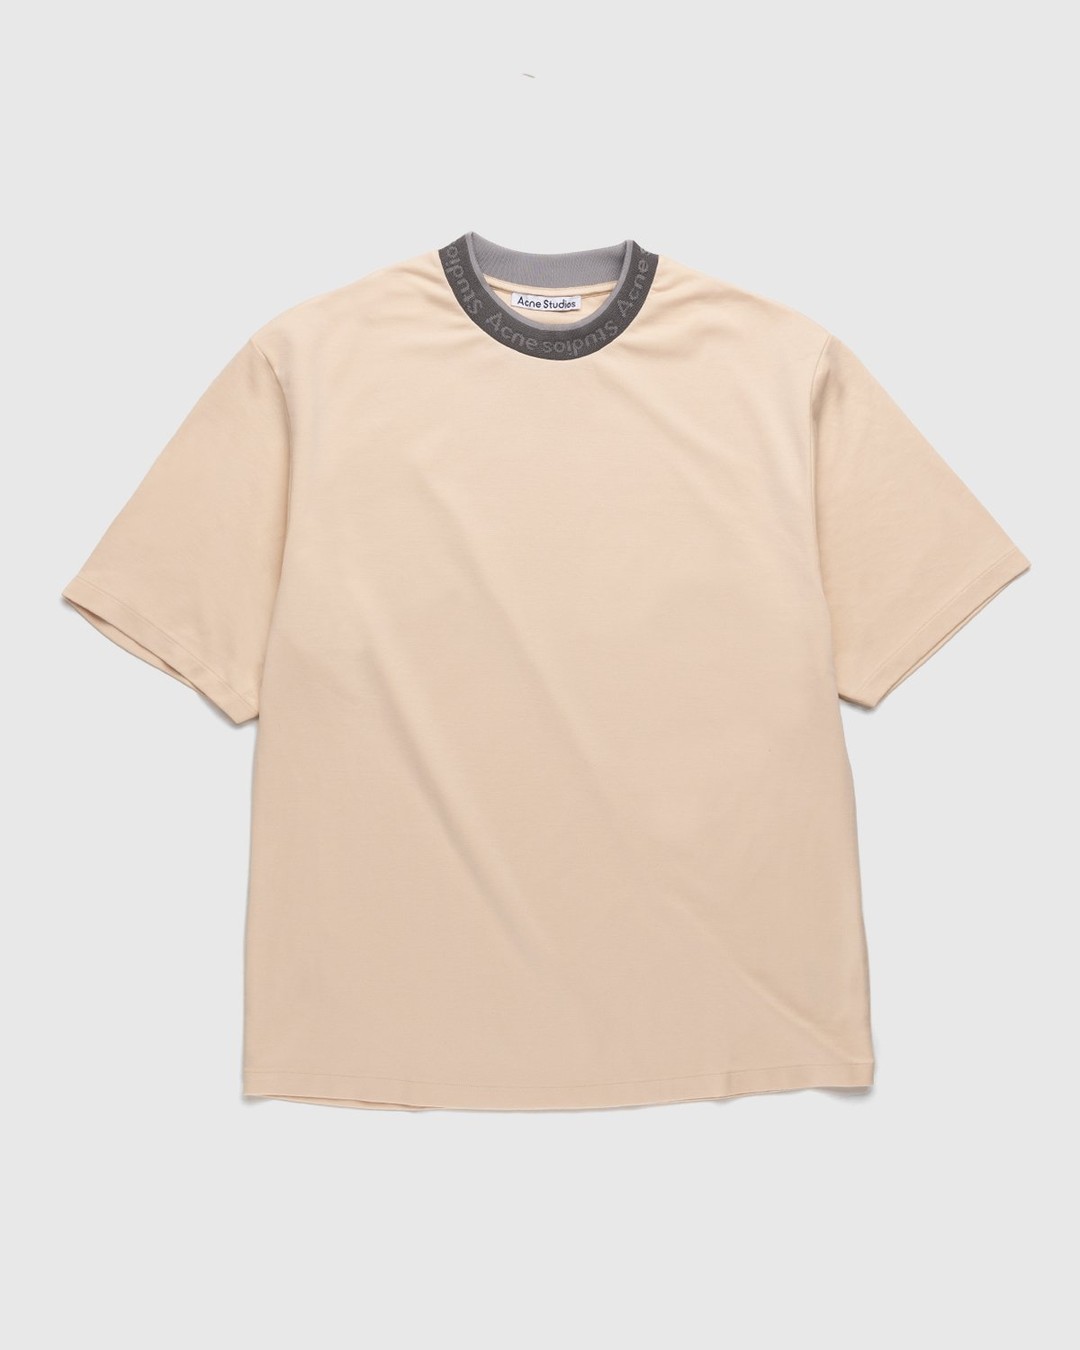 Acne Studios – Logo Collar T-Shirt Cream Beige | Highsnobiety Shop